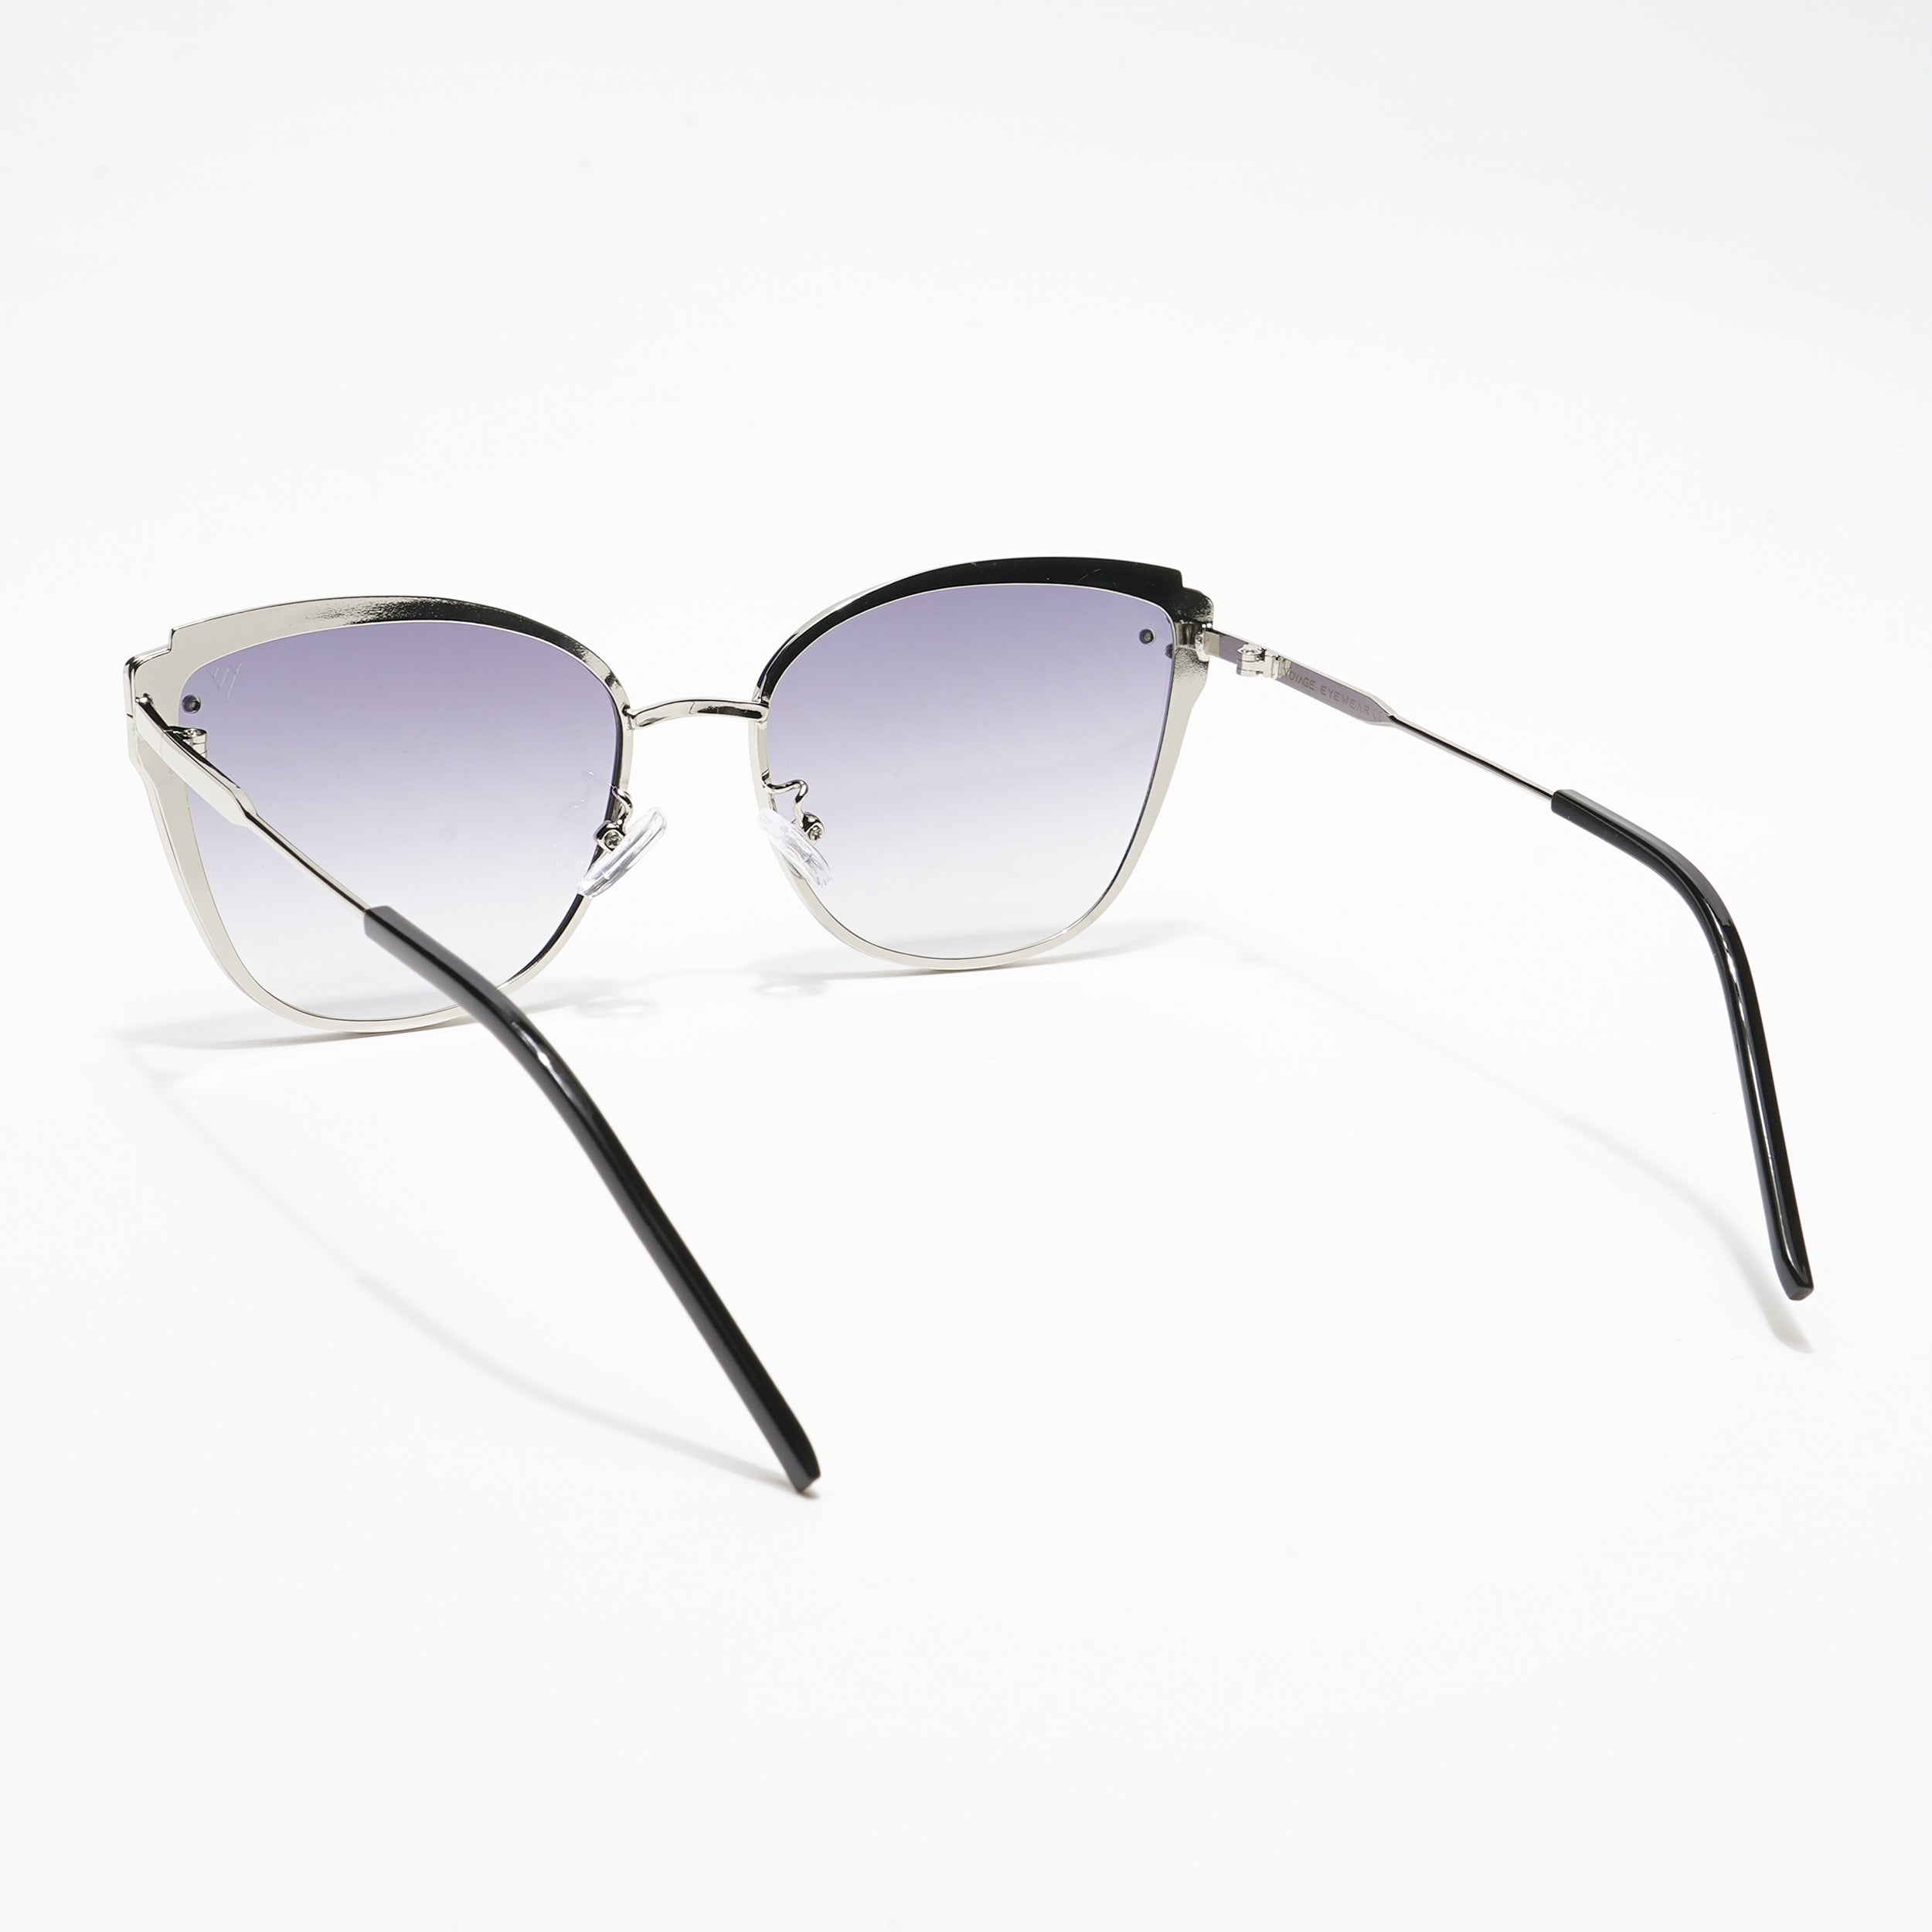 Voyage Cateye Grey Sunglasses MG2855